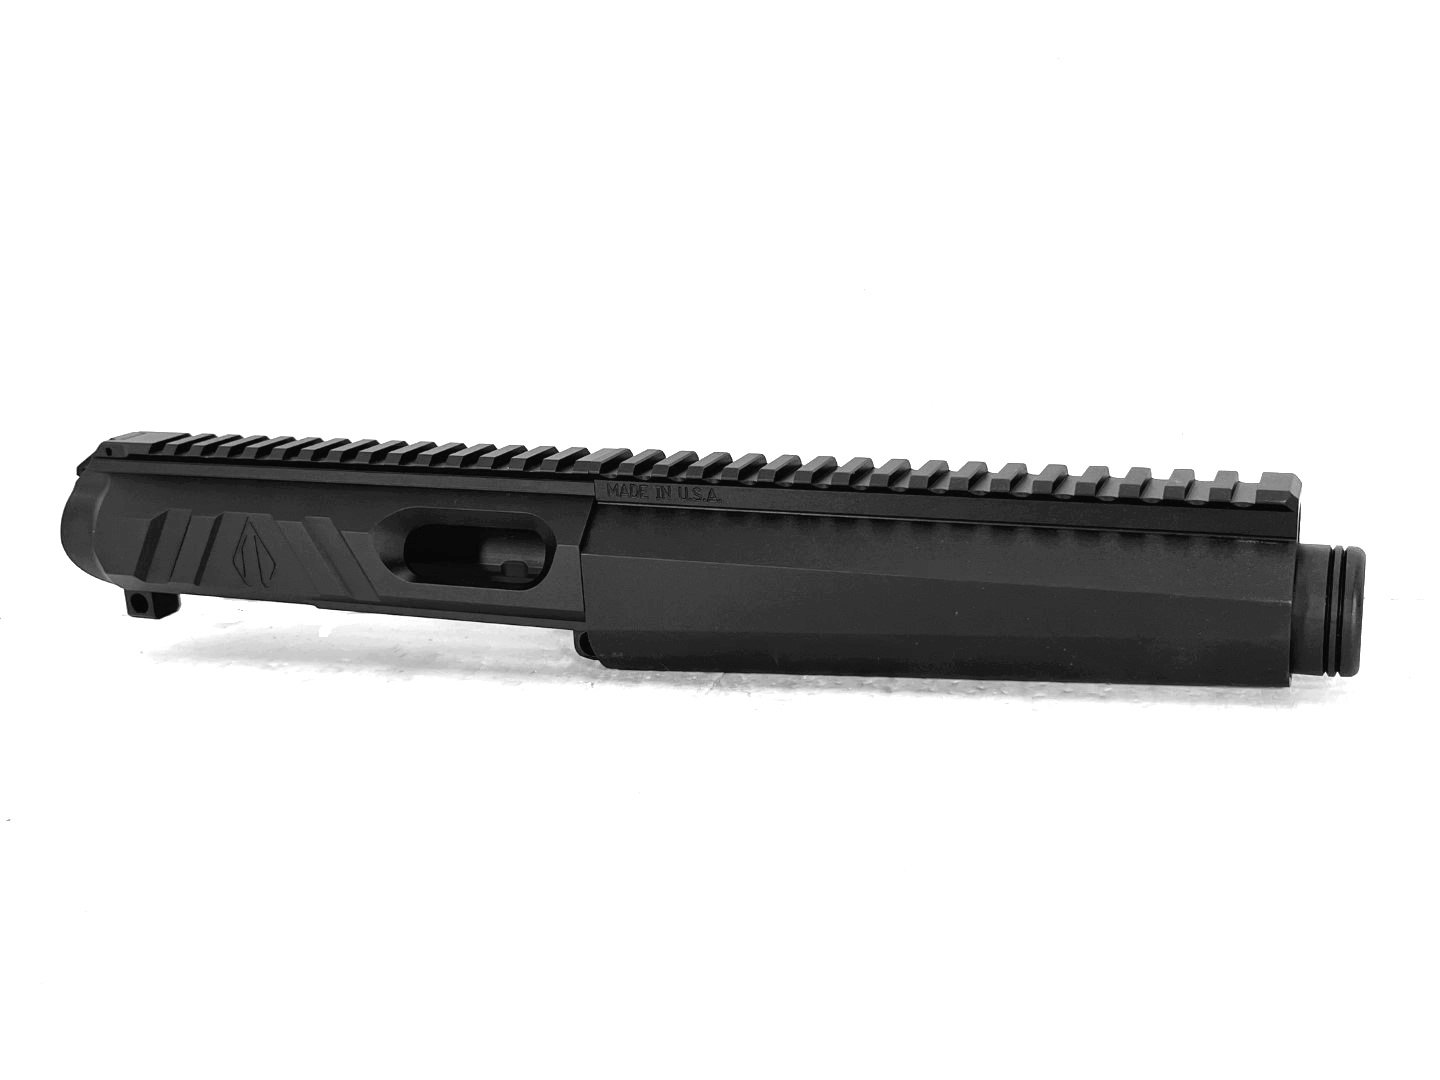 5 inch AR-15 AR-V NR Side Charging 45 ACP Pistol Caliber Melonite Upper w/Can - MP5 Style 